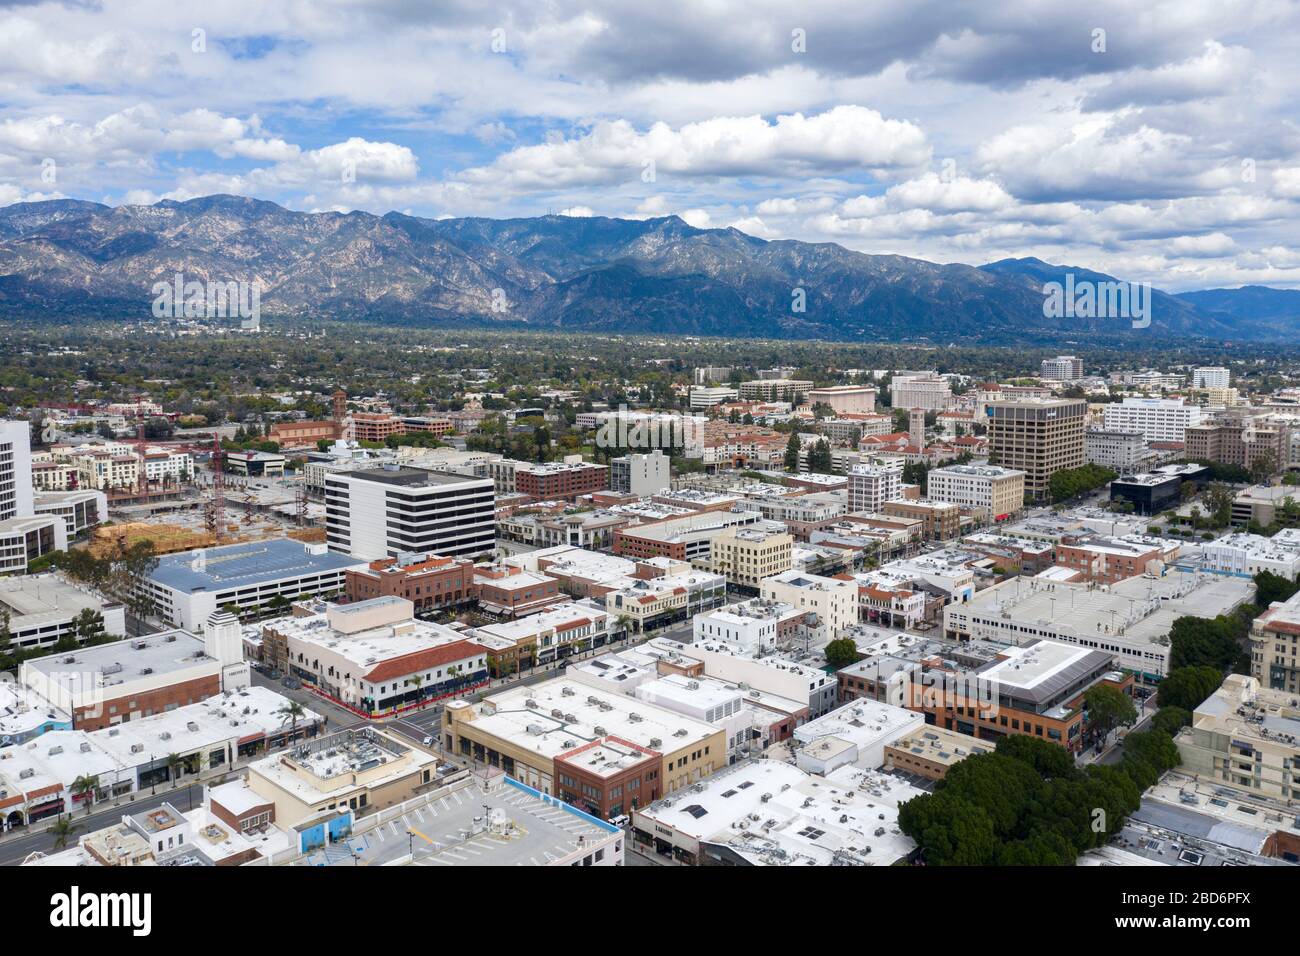 Aerial views over old town Pasadena, California Stock Photo